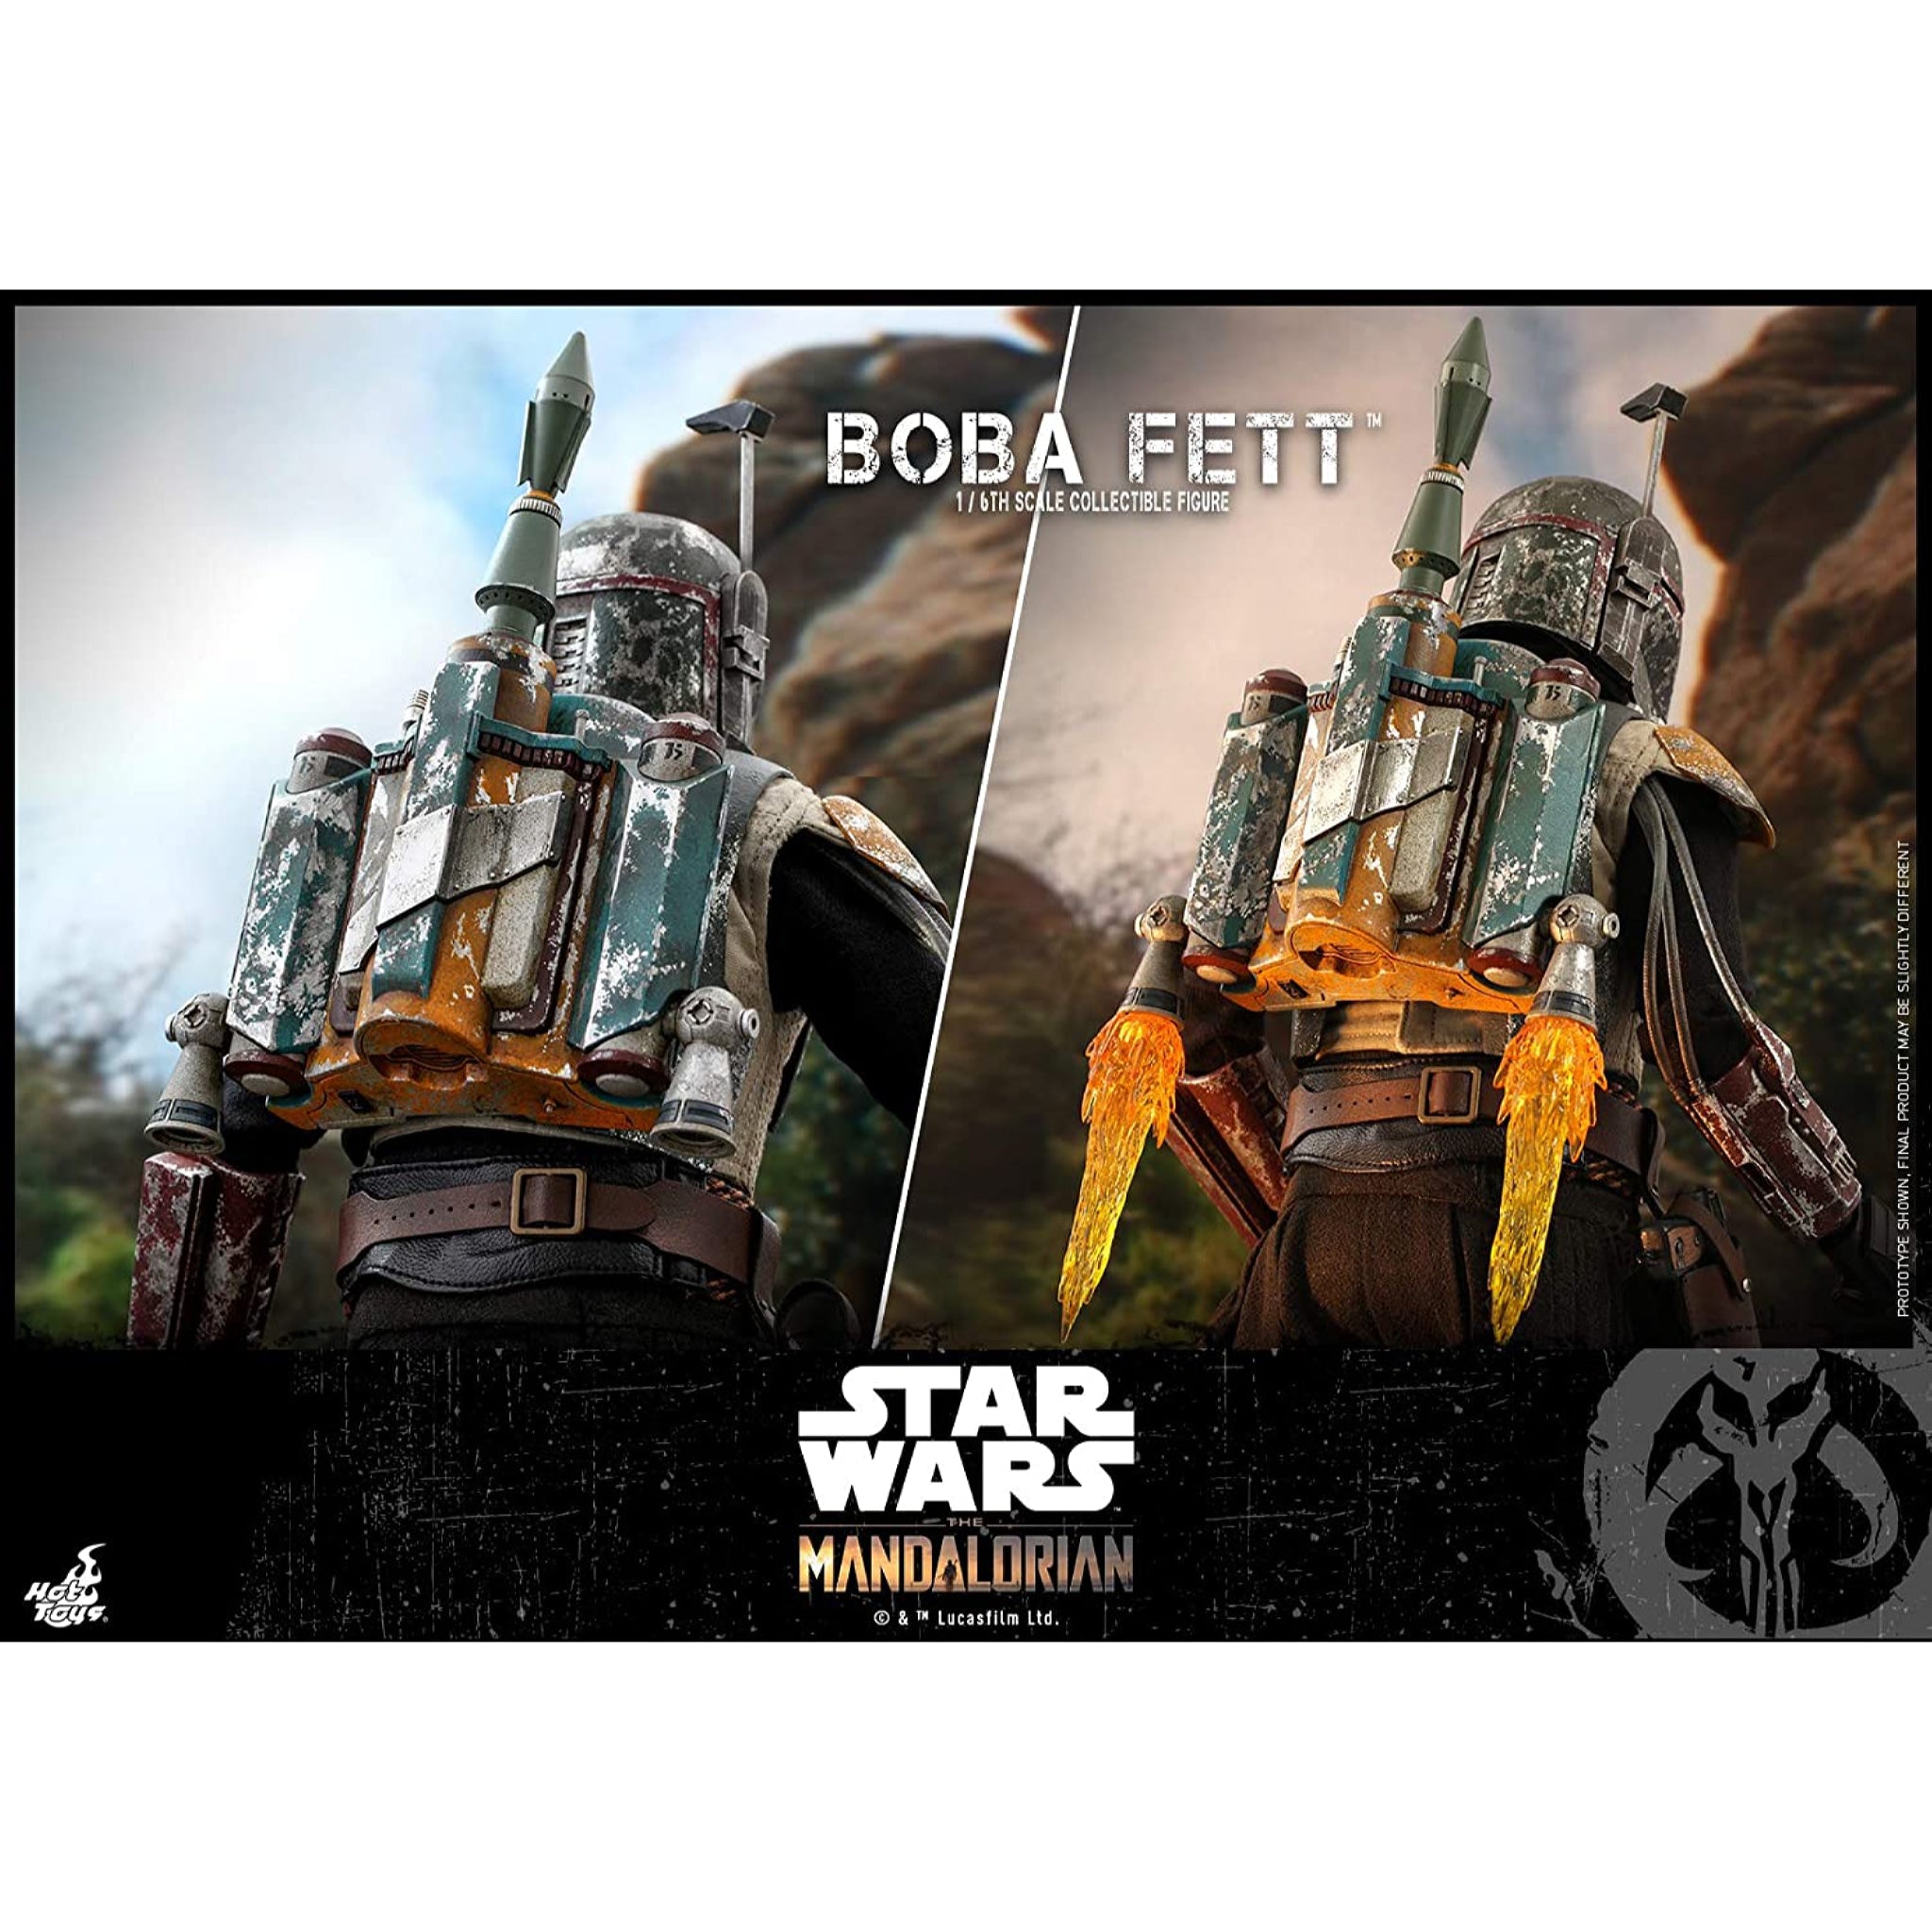 Hot Toys Star Wars The Mandalorian Television Masterpiece Boba Fett Action Figure